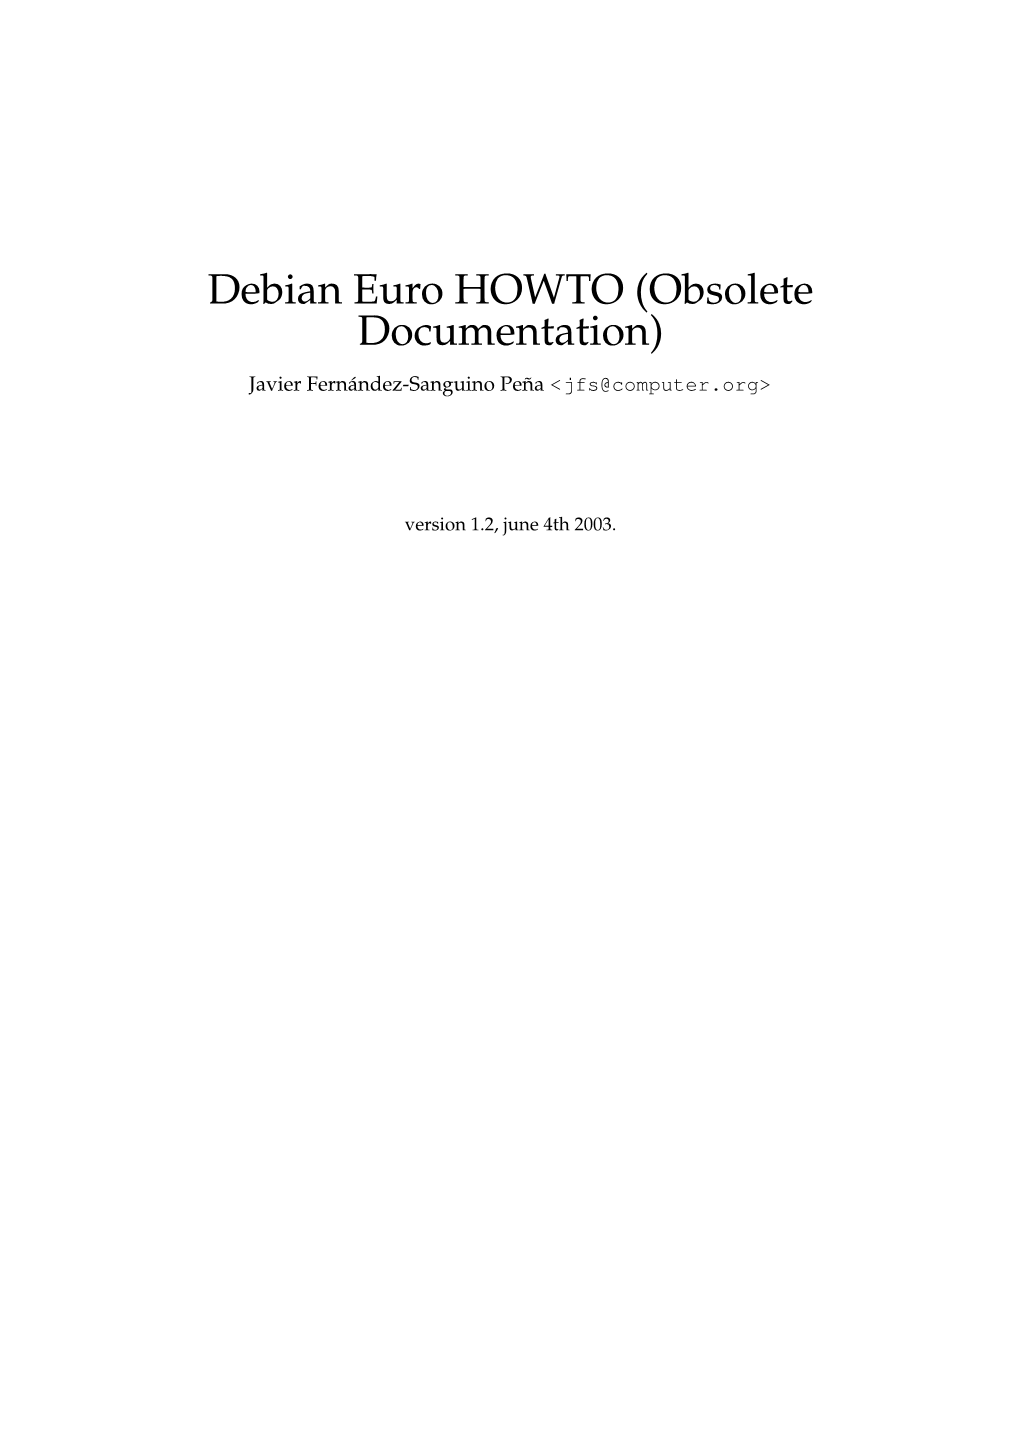 Debian Euro HOWTO (Obsolete Documentation)